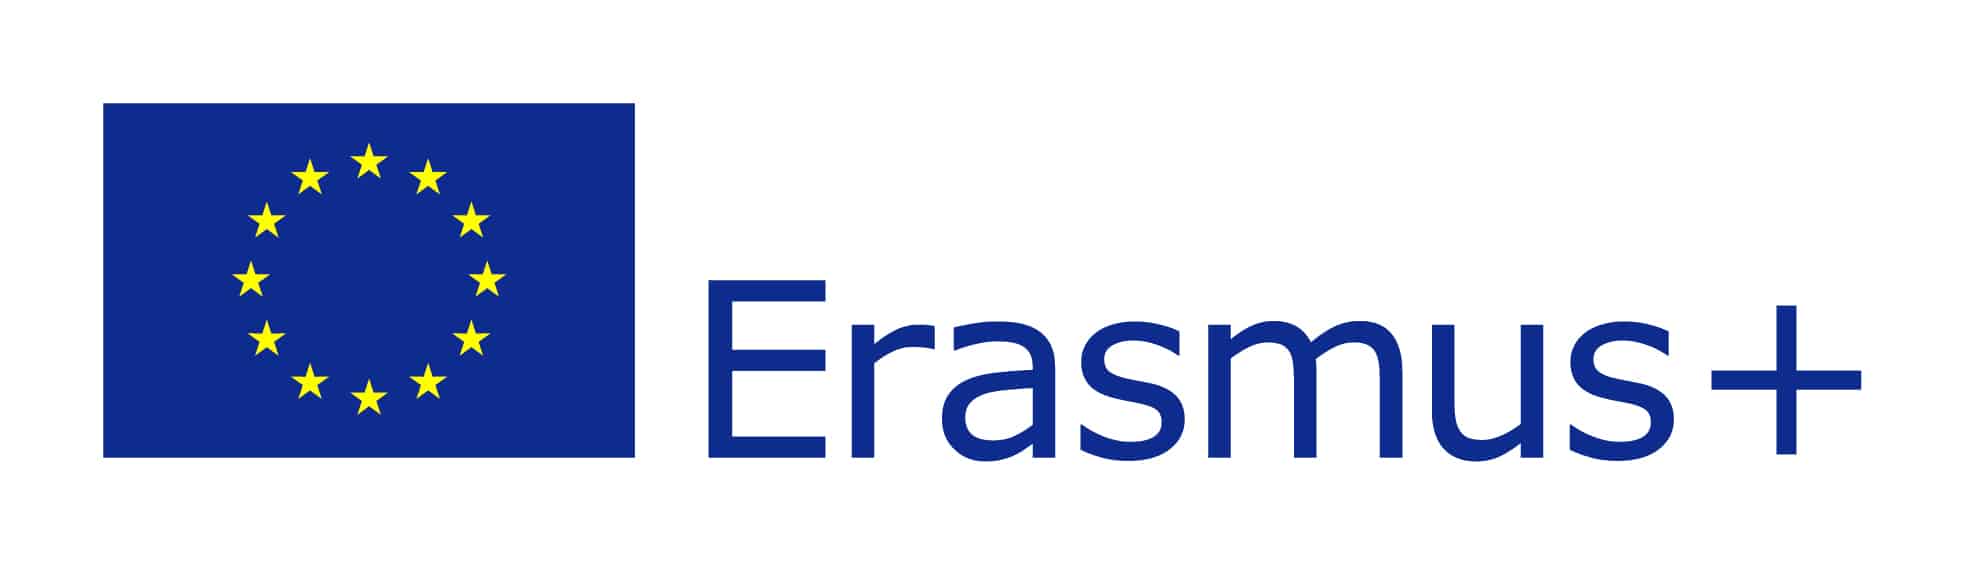 EU_flag-Erasmus_vect_POS.jpg